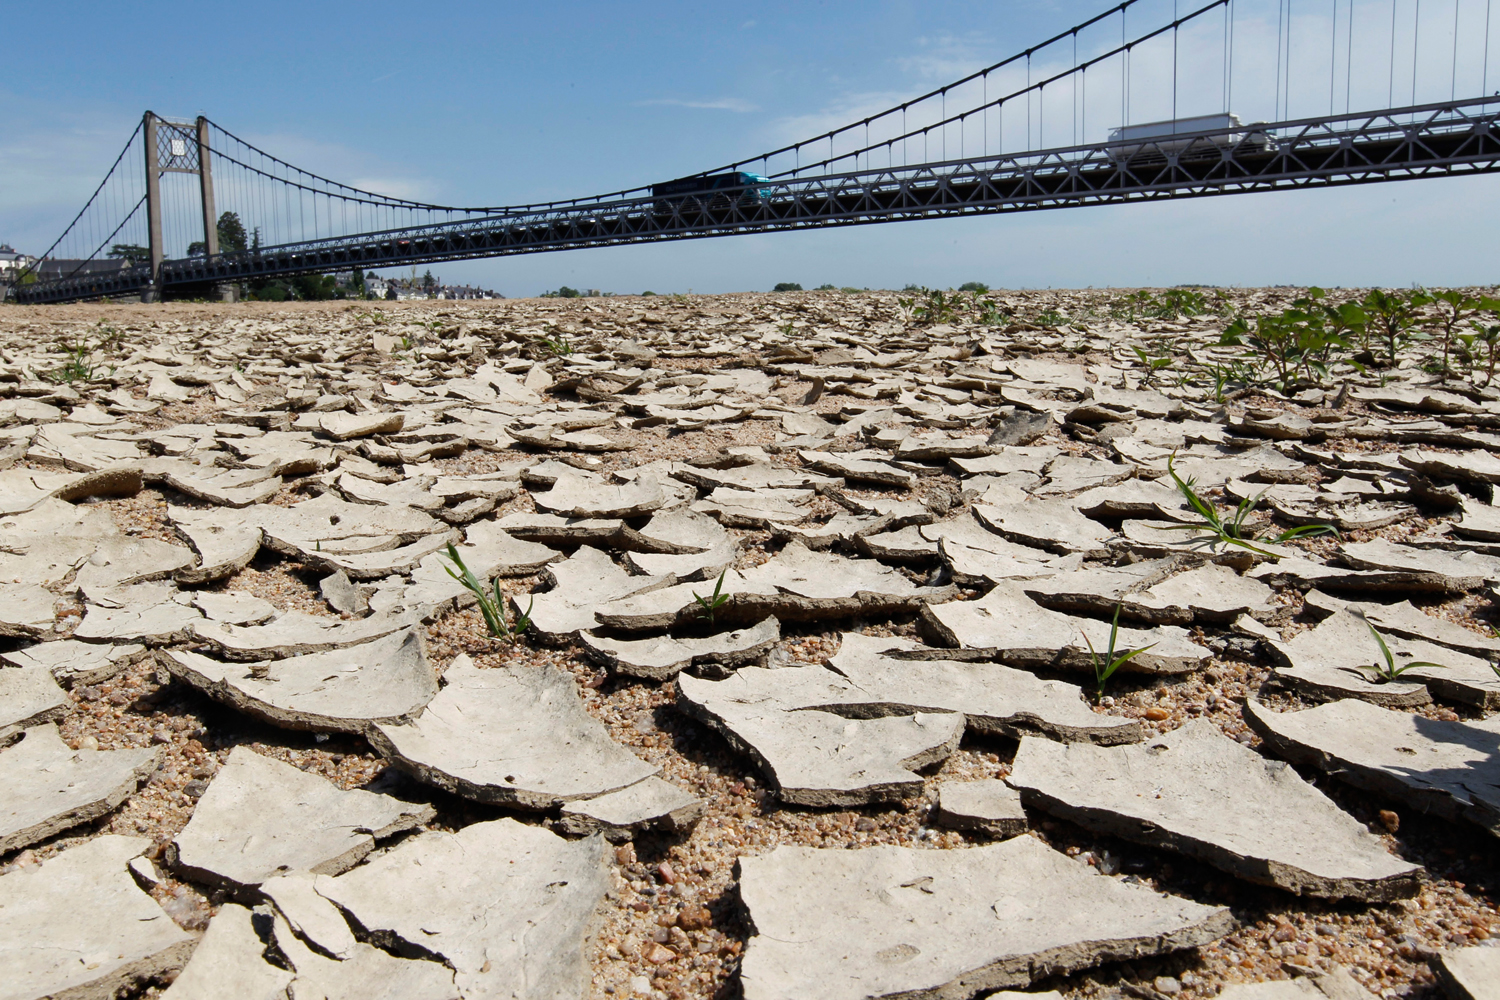 France on drought alert after hottest spring since 1900